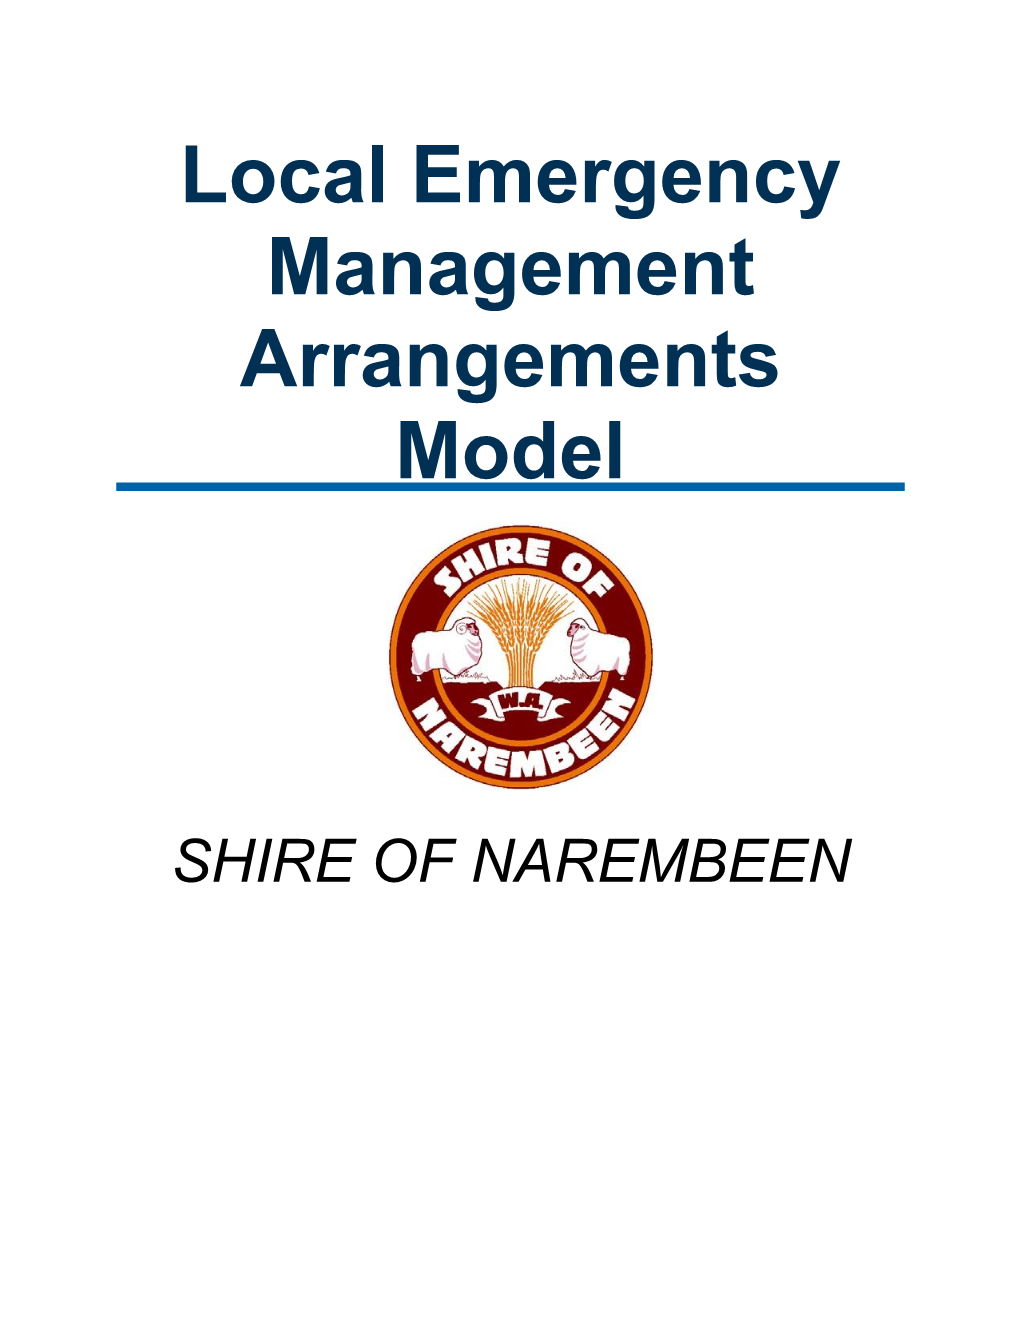 Local Emergency Management Arrangements Model